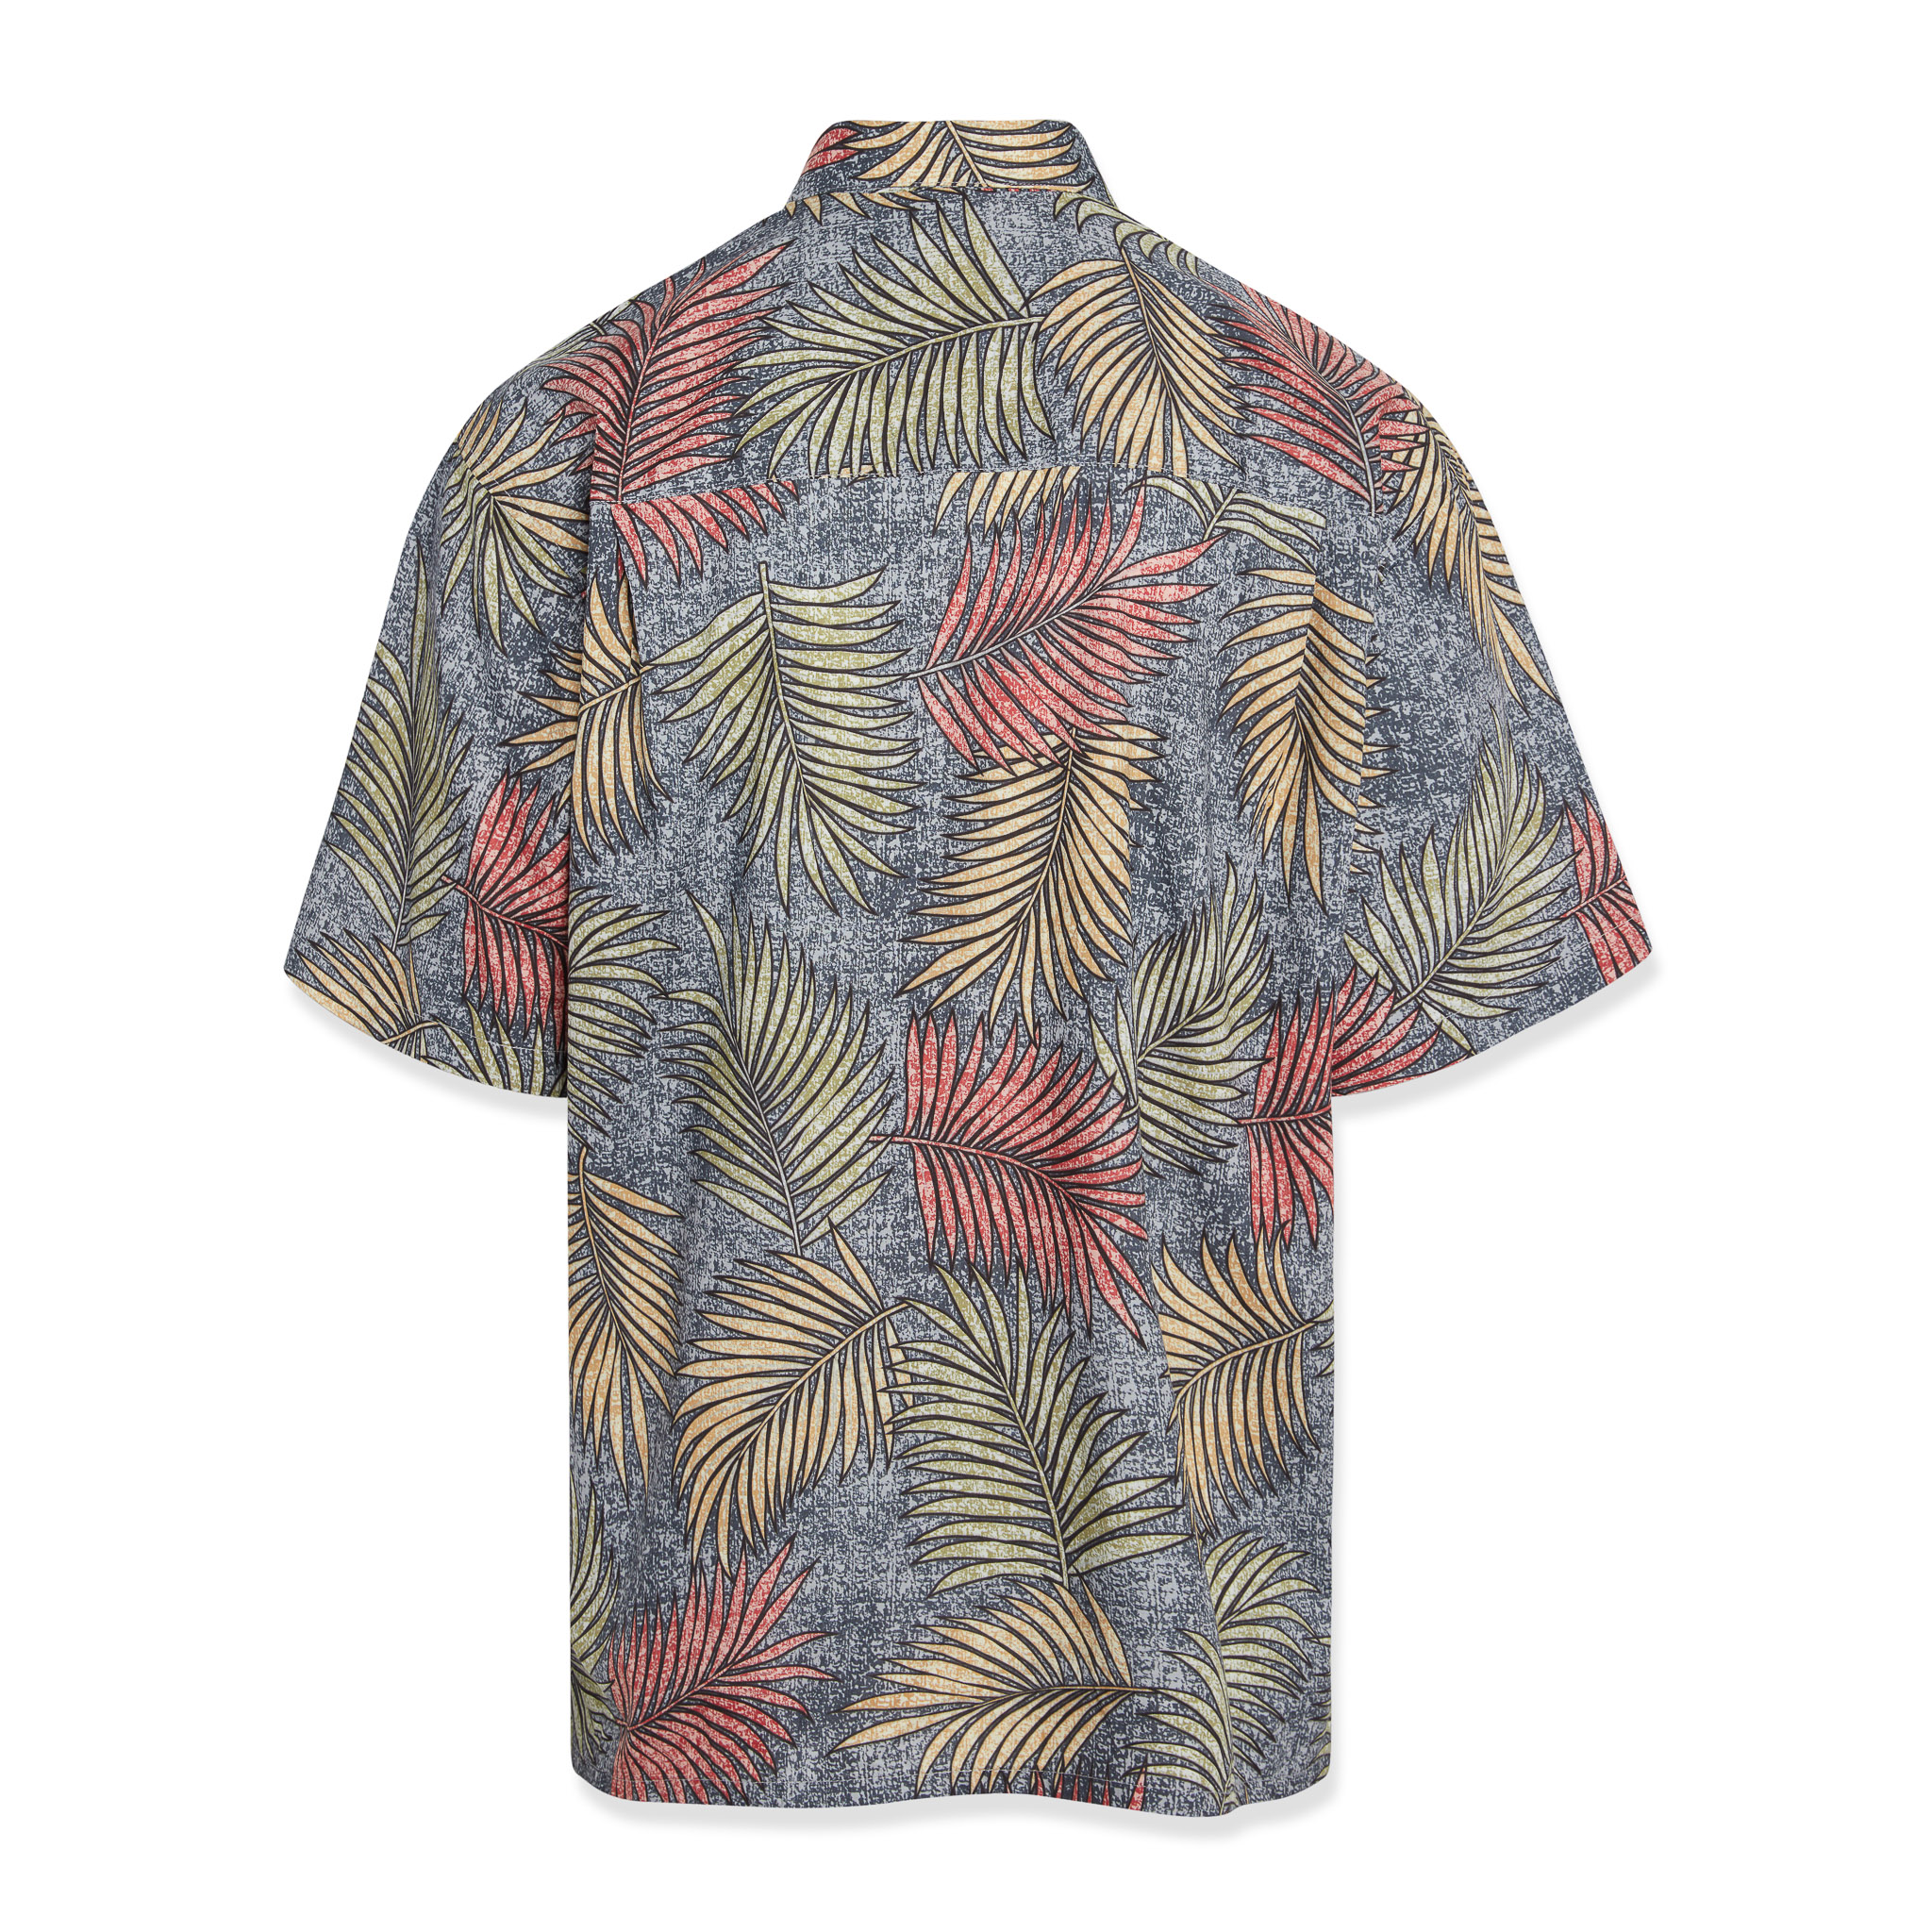 Bamboo cay mens modal blend hawaiian tropical print shirt